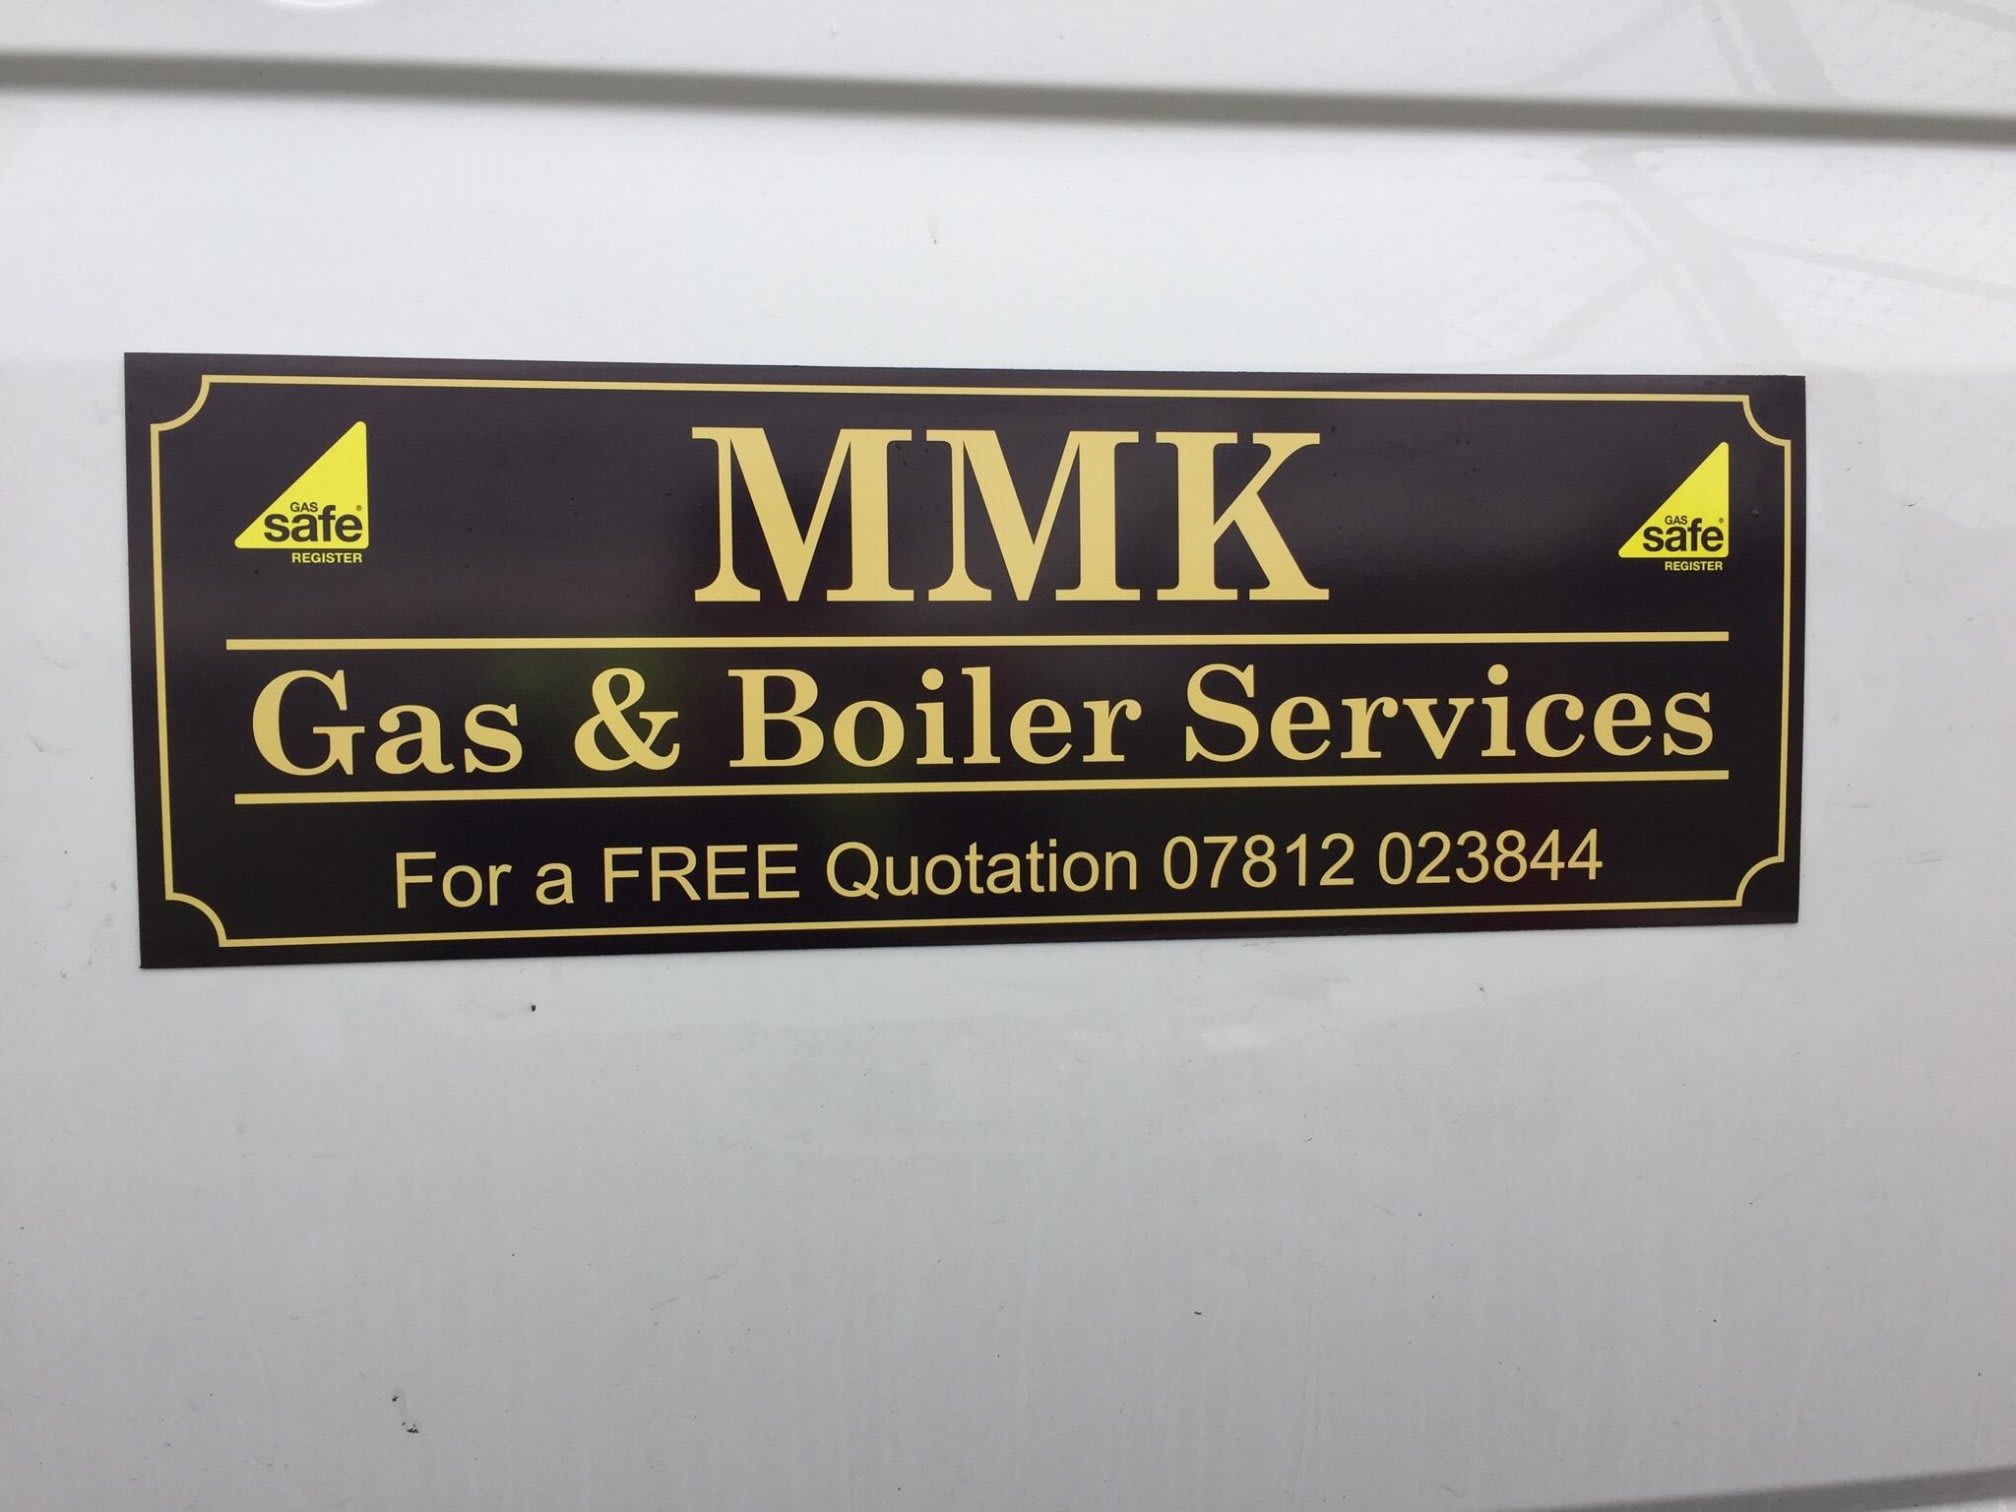 MMK Gas & Boiler Services Tamworth 07812 023844